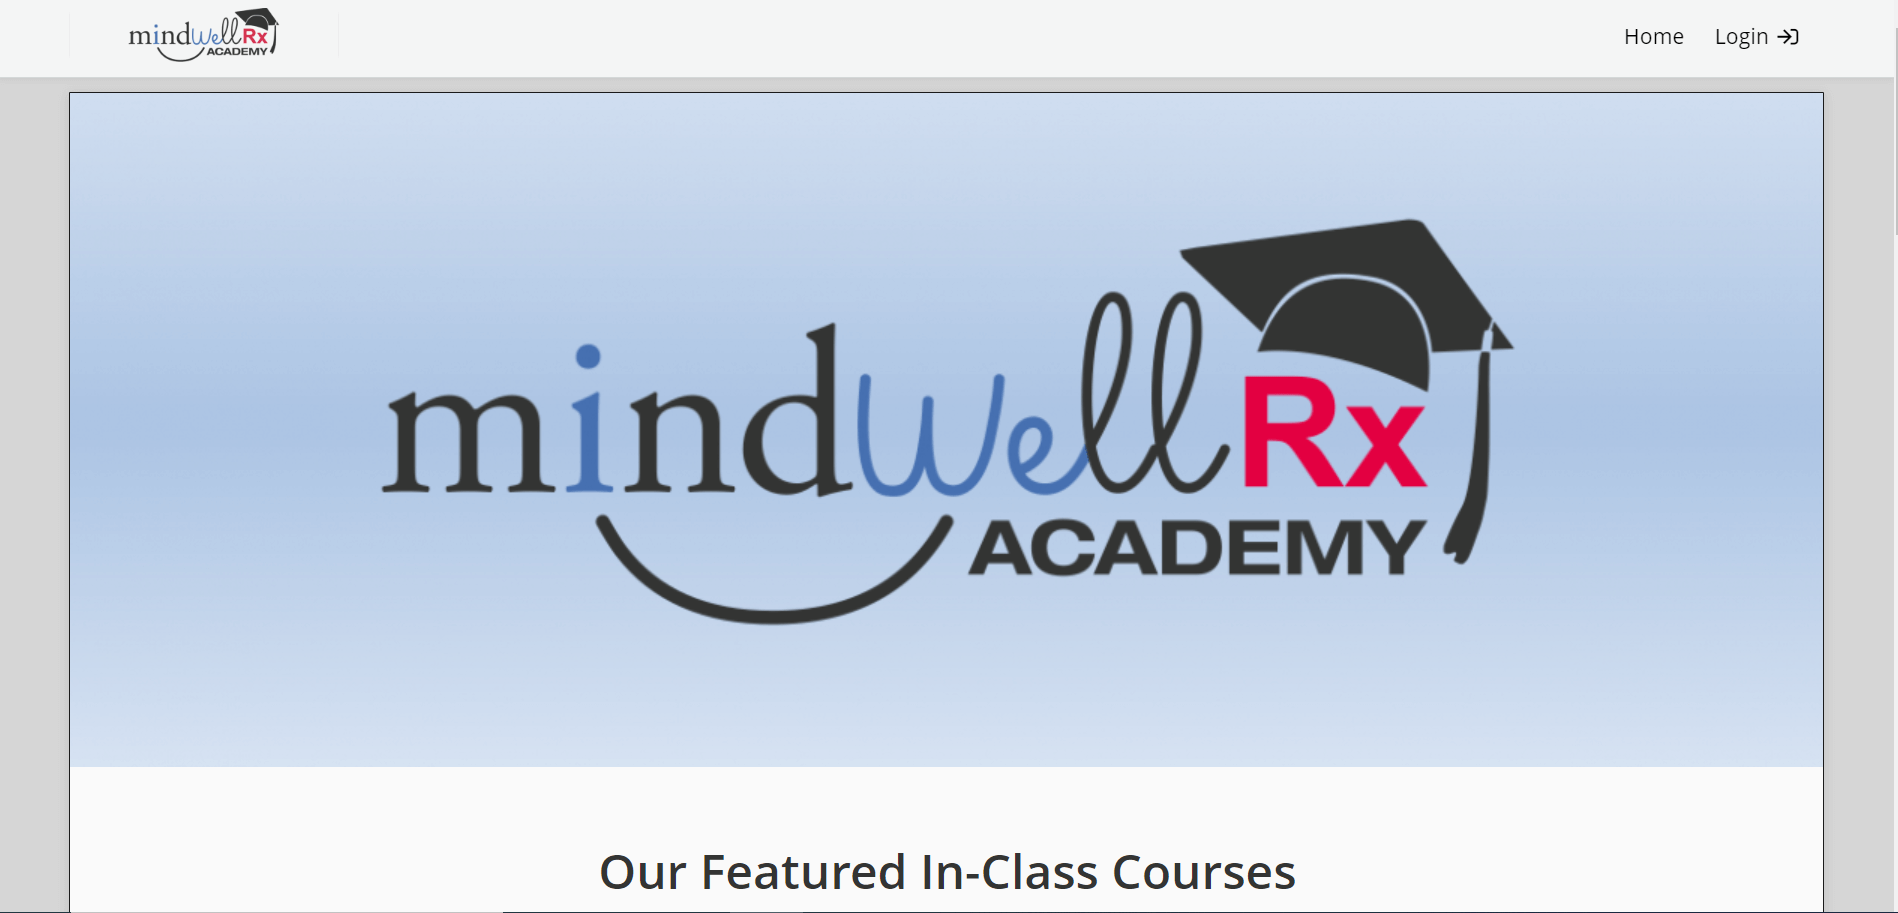 mindwell rx academy training portal homepage